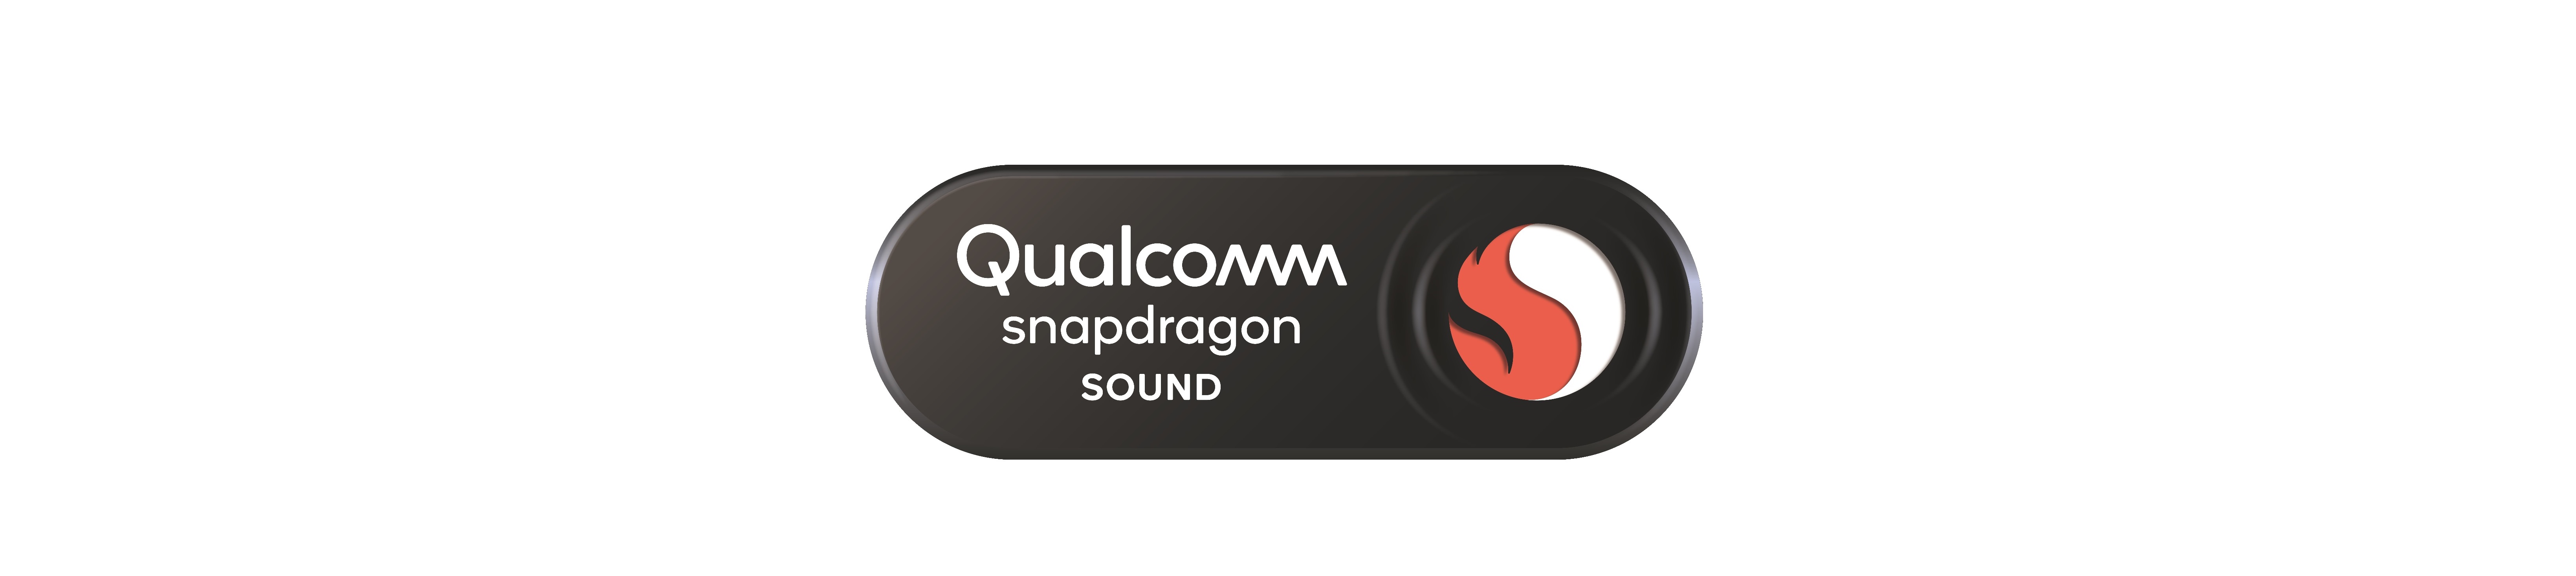 【cheero】Qualcomm Snapdragon Sound技術を次期製品に採用